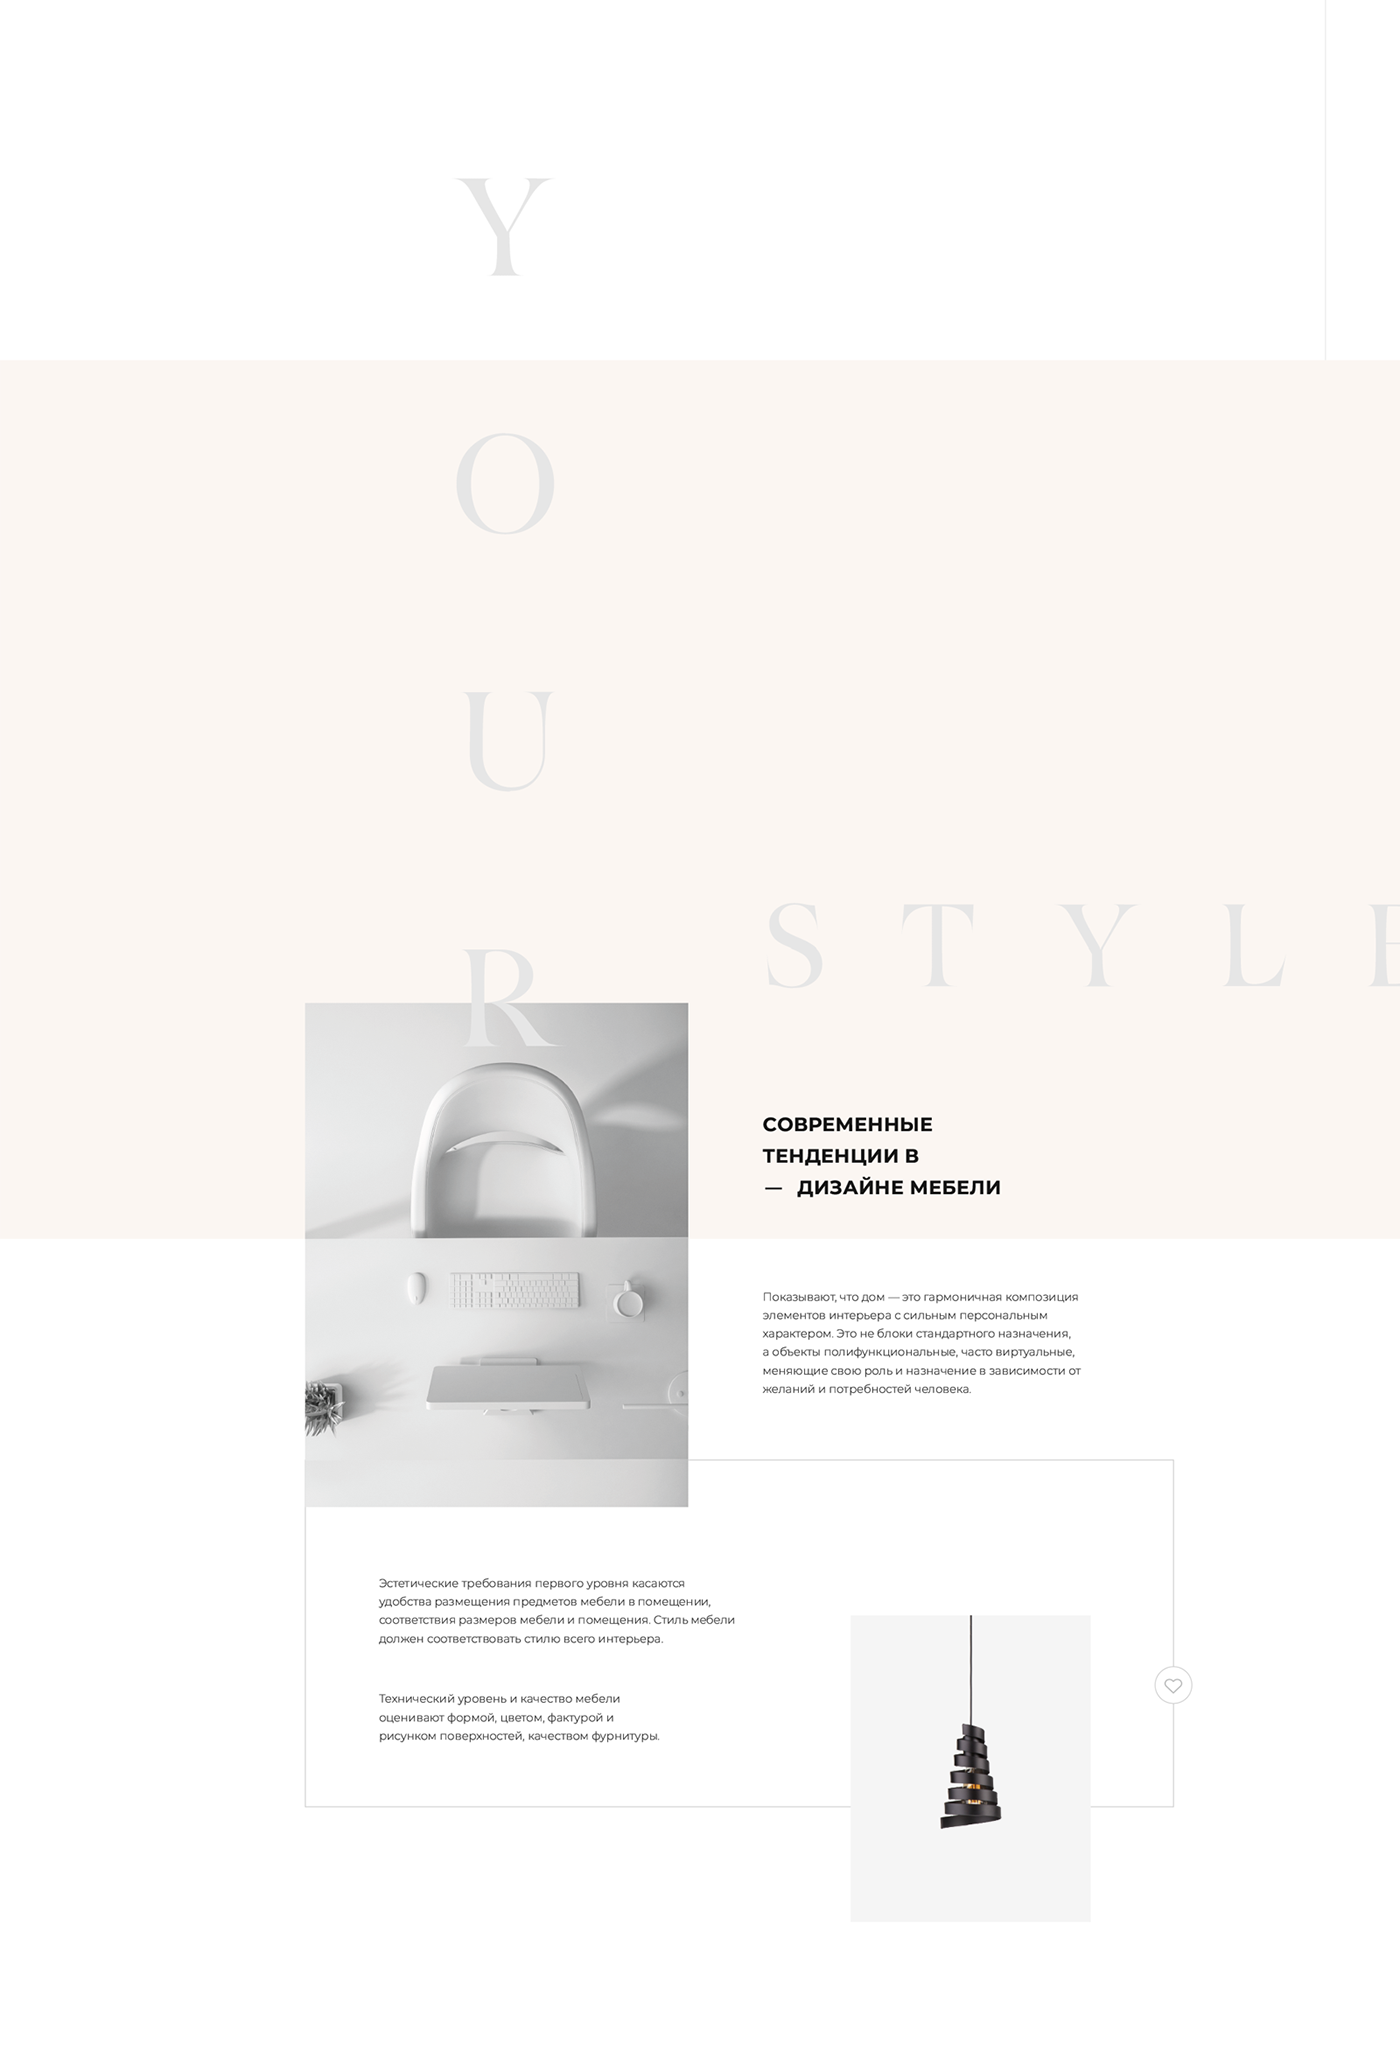 clean e-commerce Fashion  interface design shop ux/ui Web Design  luxury online store Adobe XD